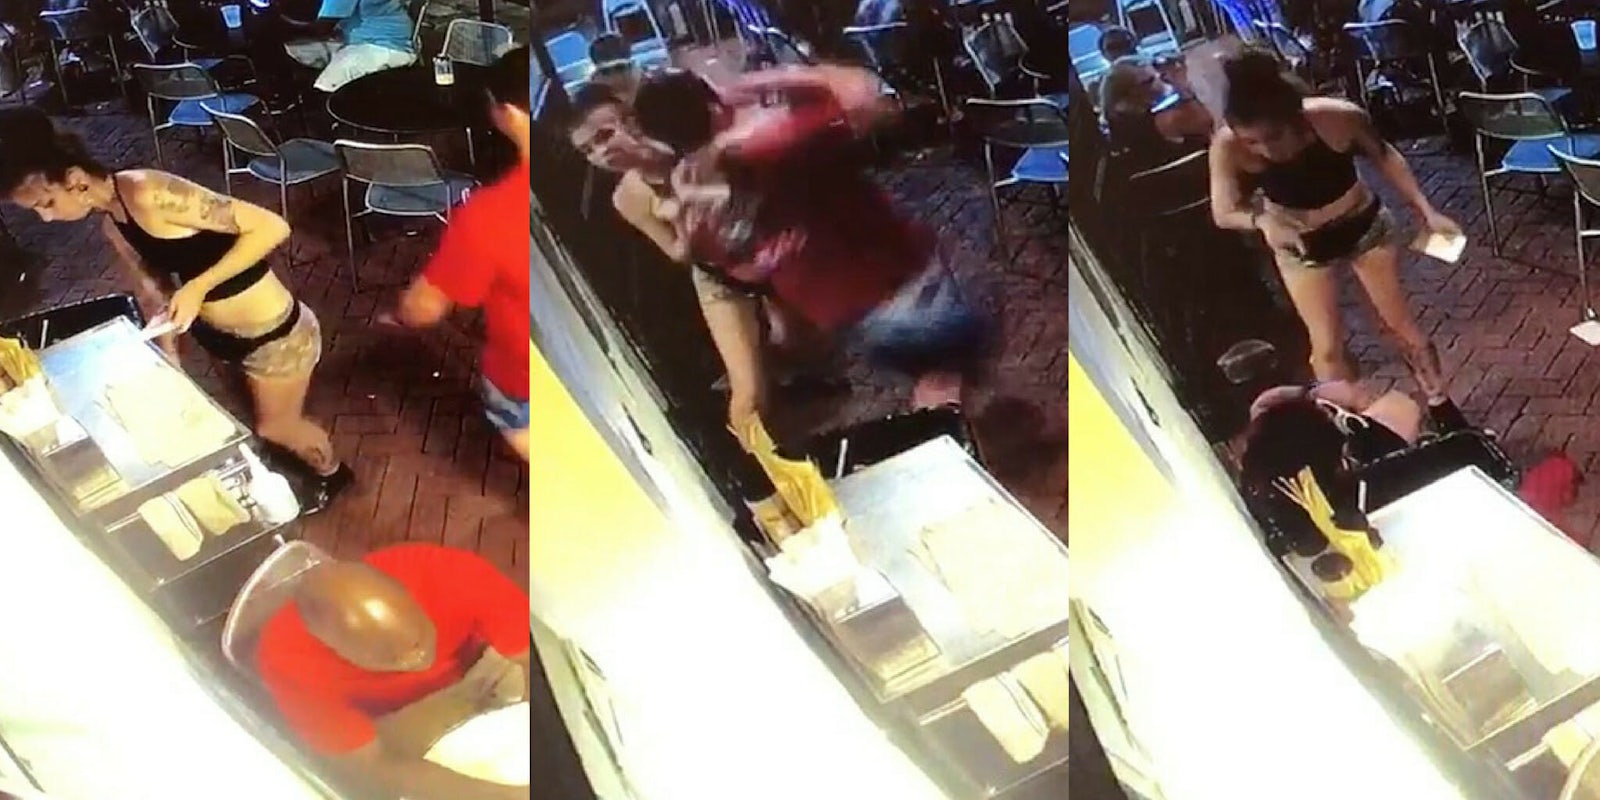 Georgia server slams customer who groped her to the ground.